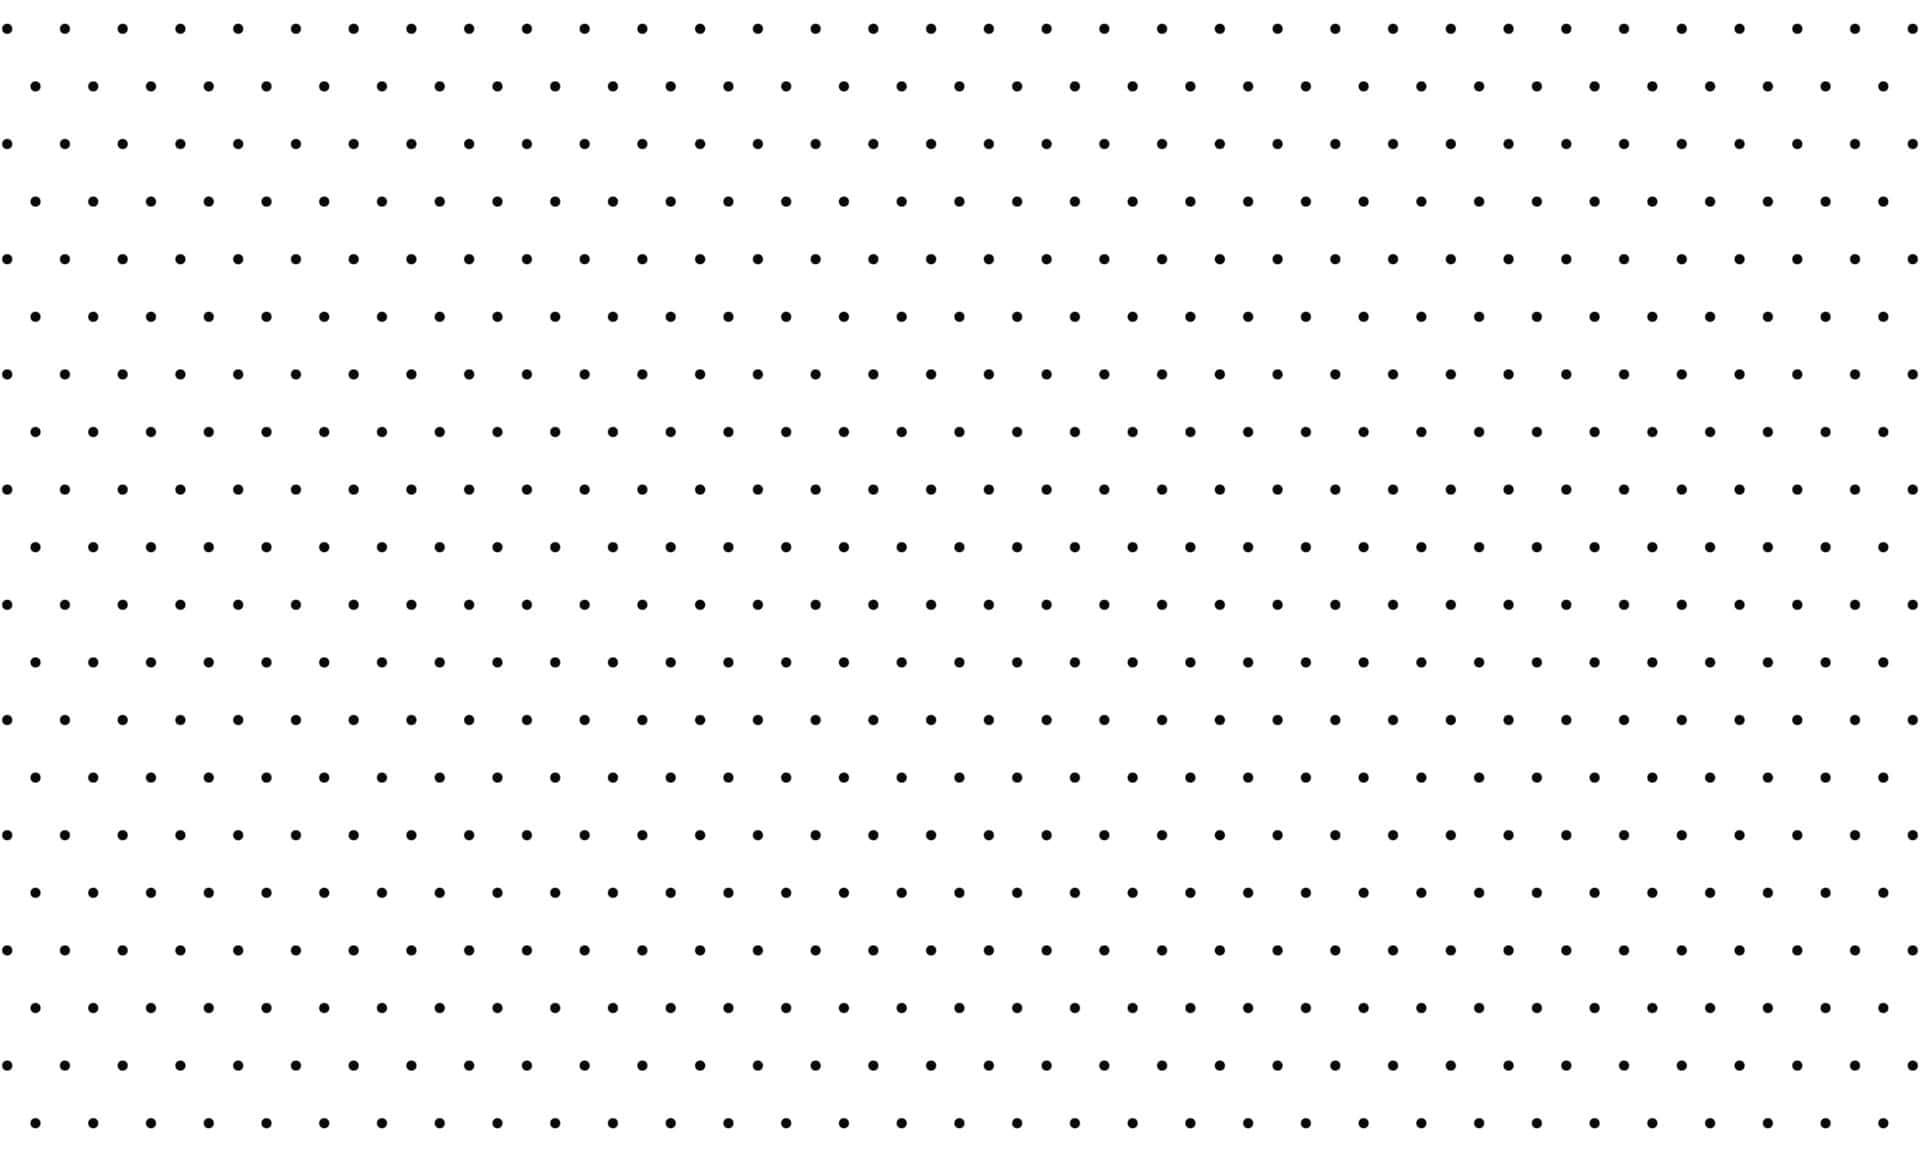 [100+] Dot Backgrounds | Wallpapers.com